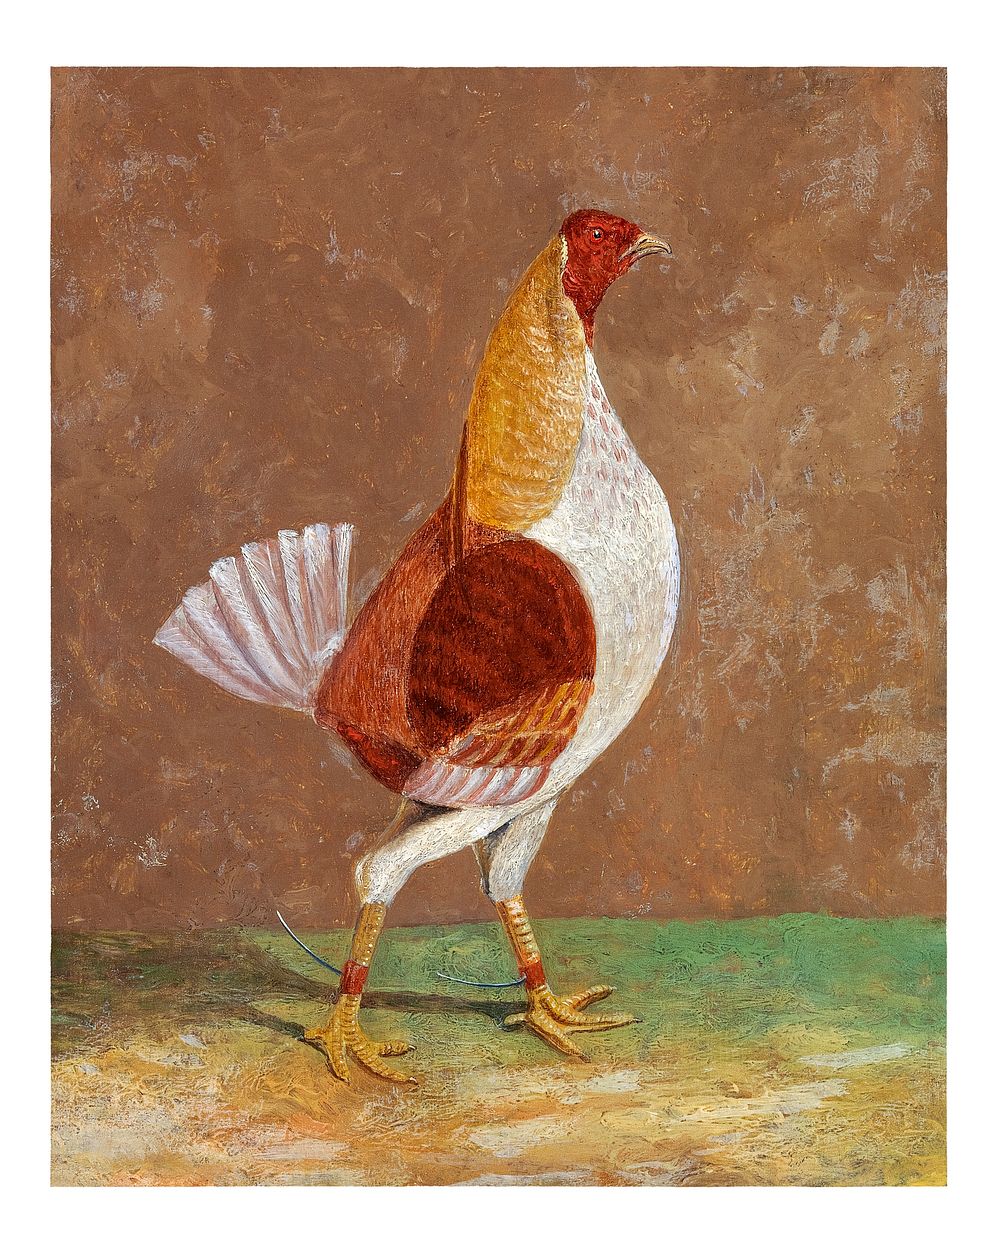 Fighting cock art print, vintage illustration by John Frederick Herring